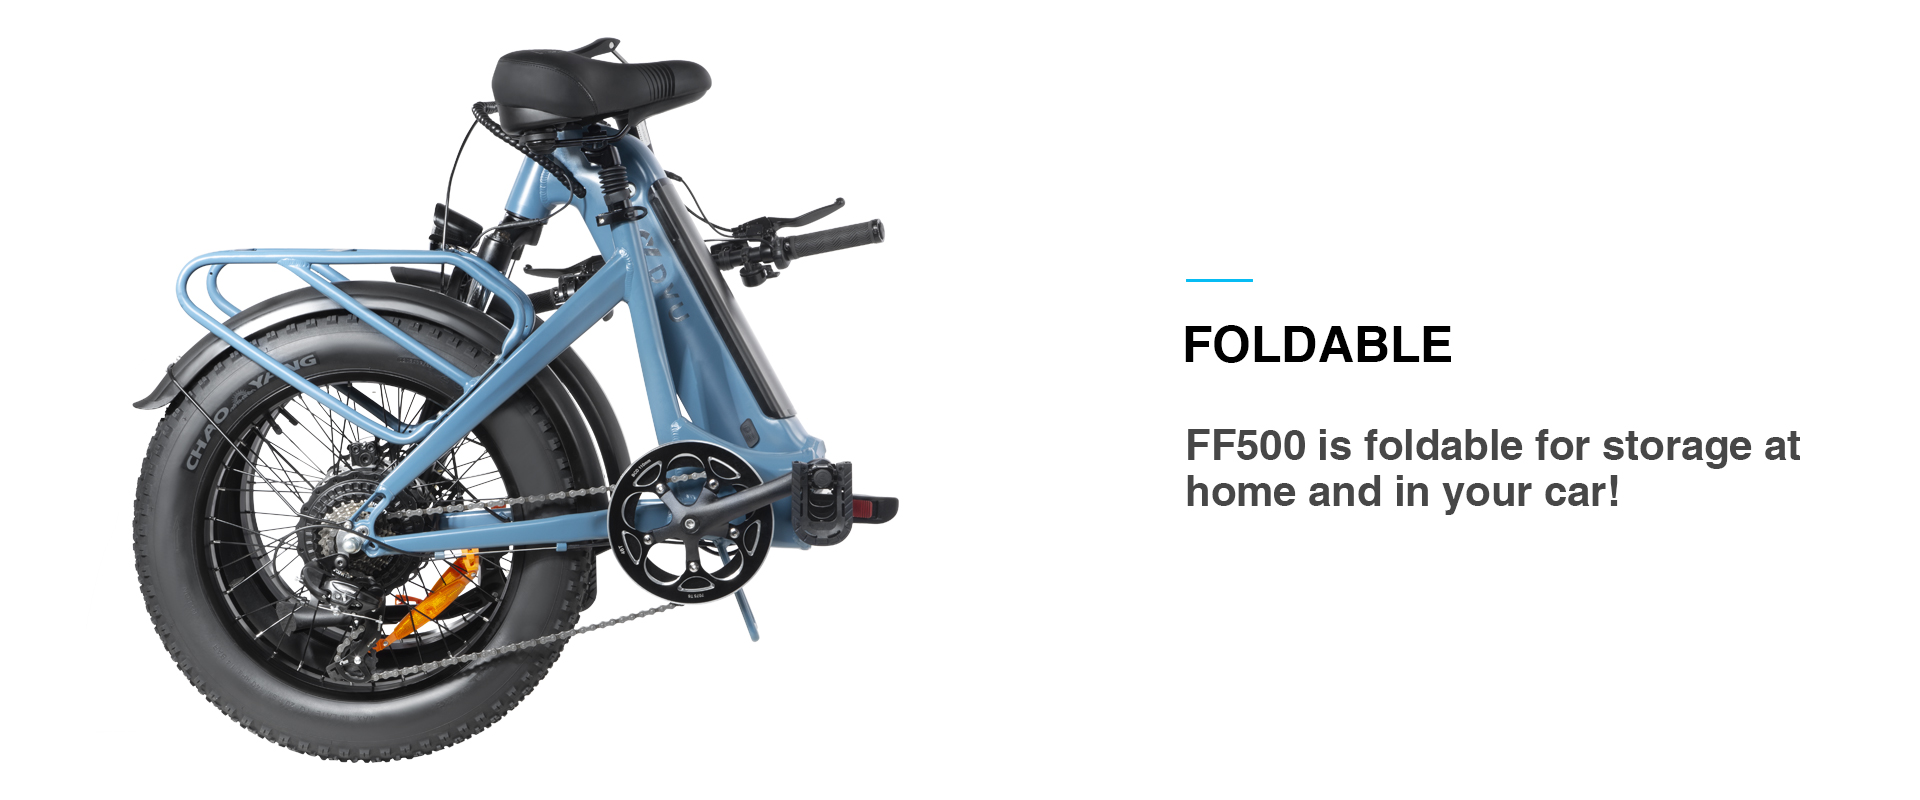 dyu ff500 ebike hercules cycle électrique meilleur vélo électrique pas cher vélos électriques d'occasion à vendre craigslist biktrix mastodonte carbo vélo électrique sterne vélo électrique nwow prix ebike vélo pedelec radrunner ebike